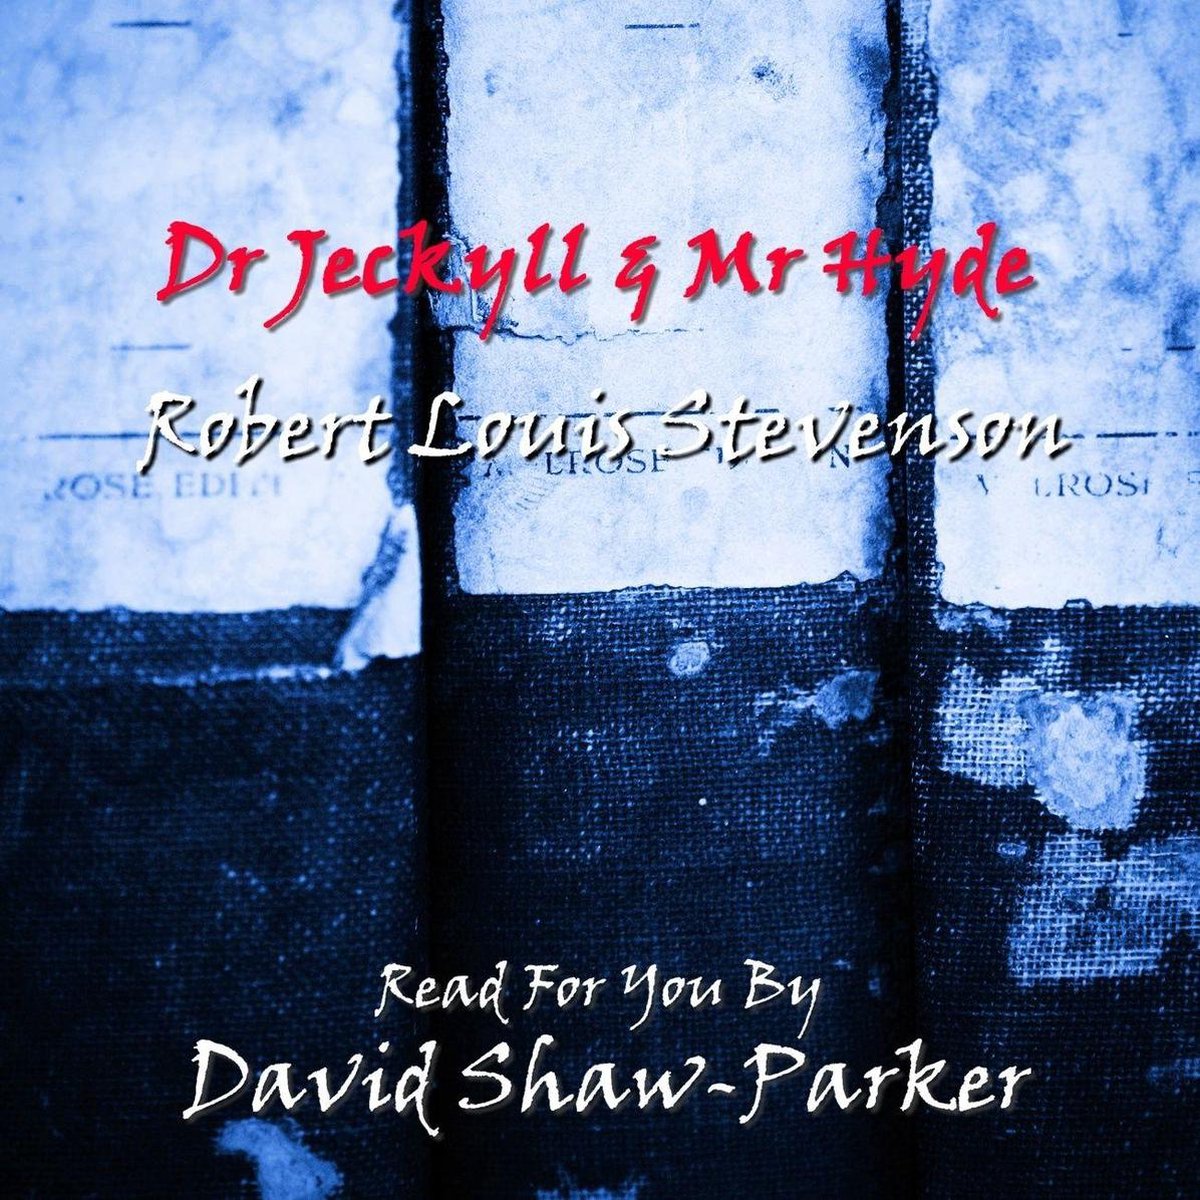 Dr. Jeckyll & Mr Hyde {Christopher Lee) - Robert Louis Stevenson